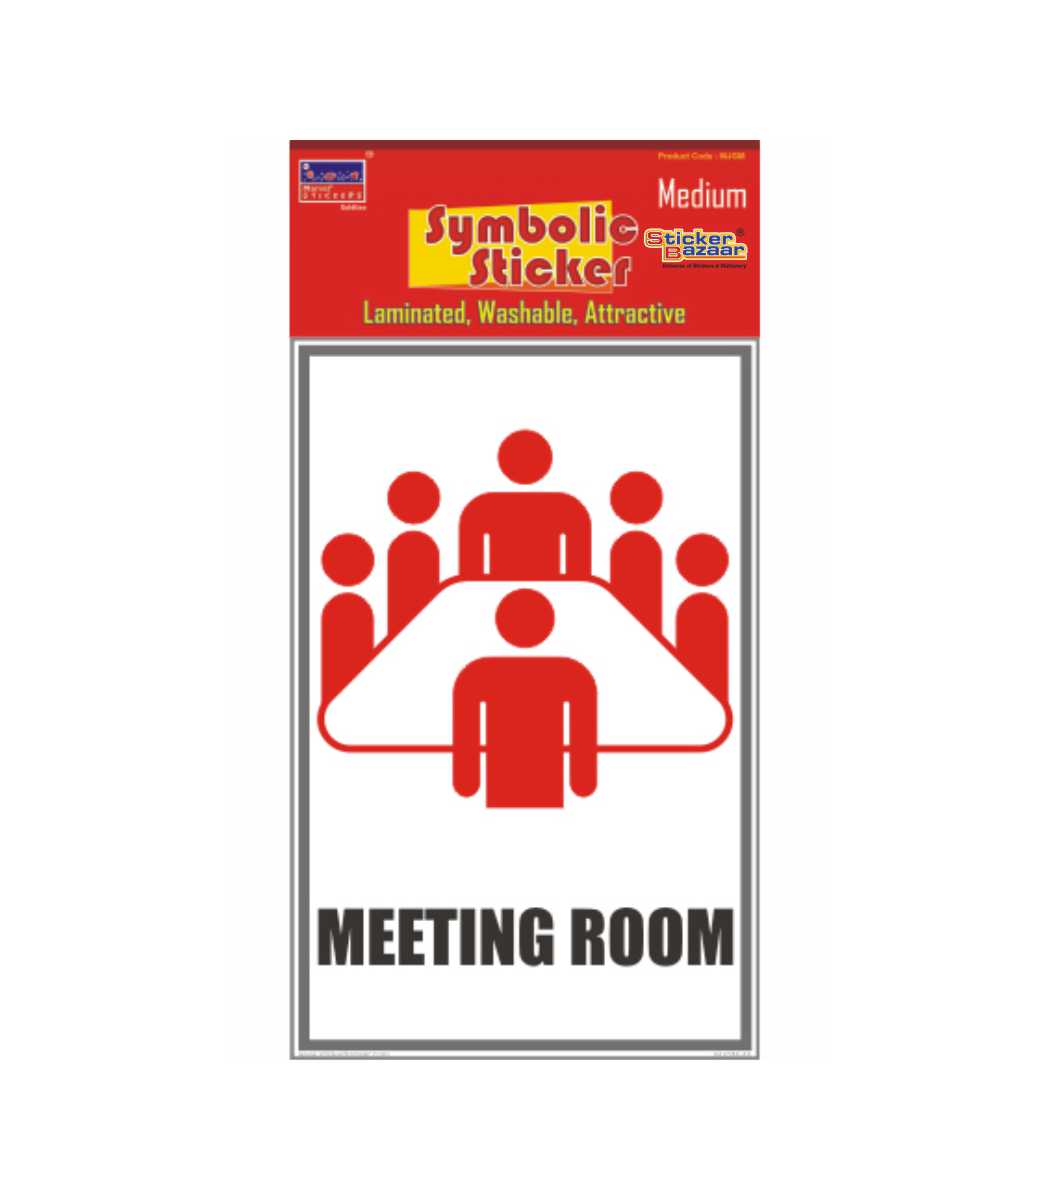 Meeting Room Medium Symbolic Sticker